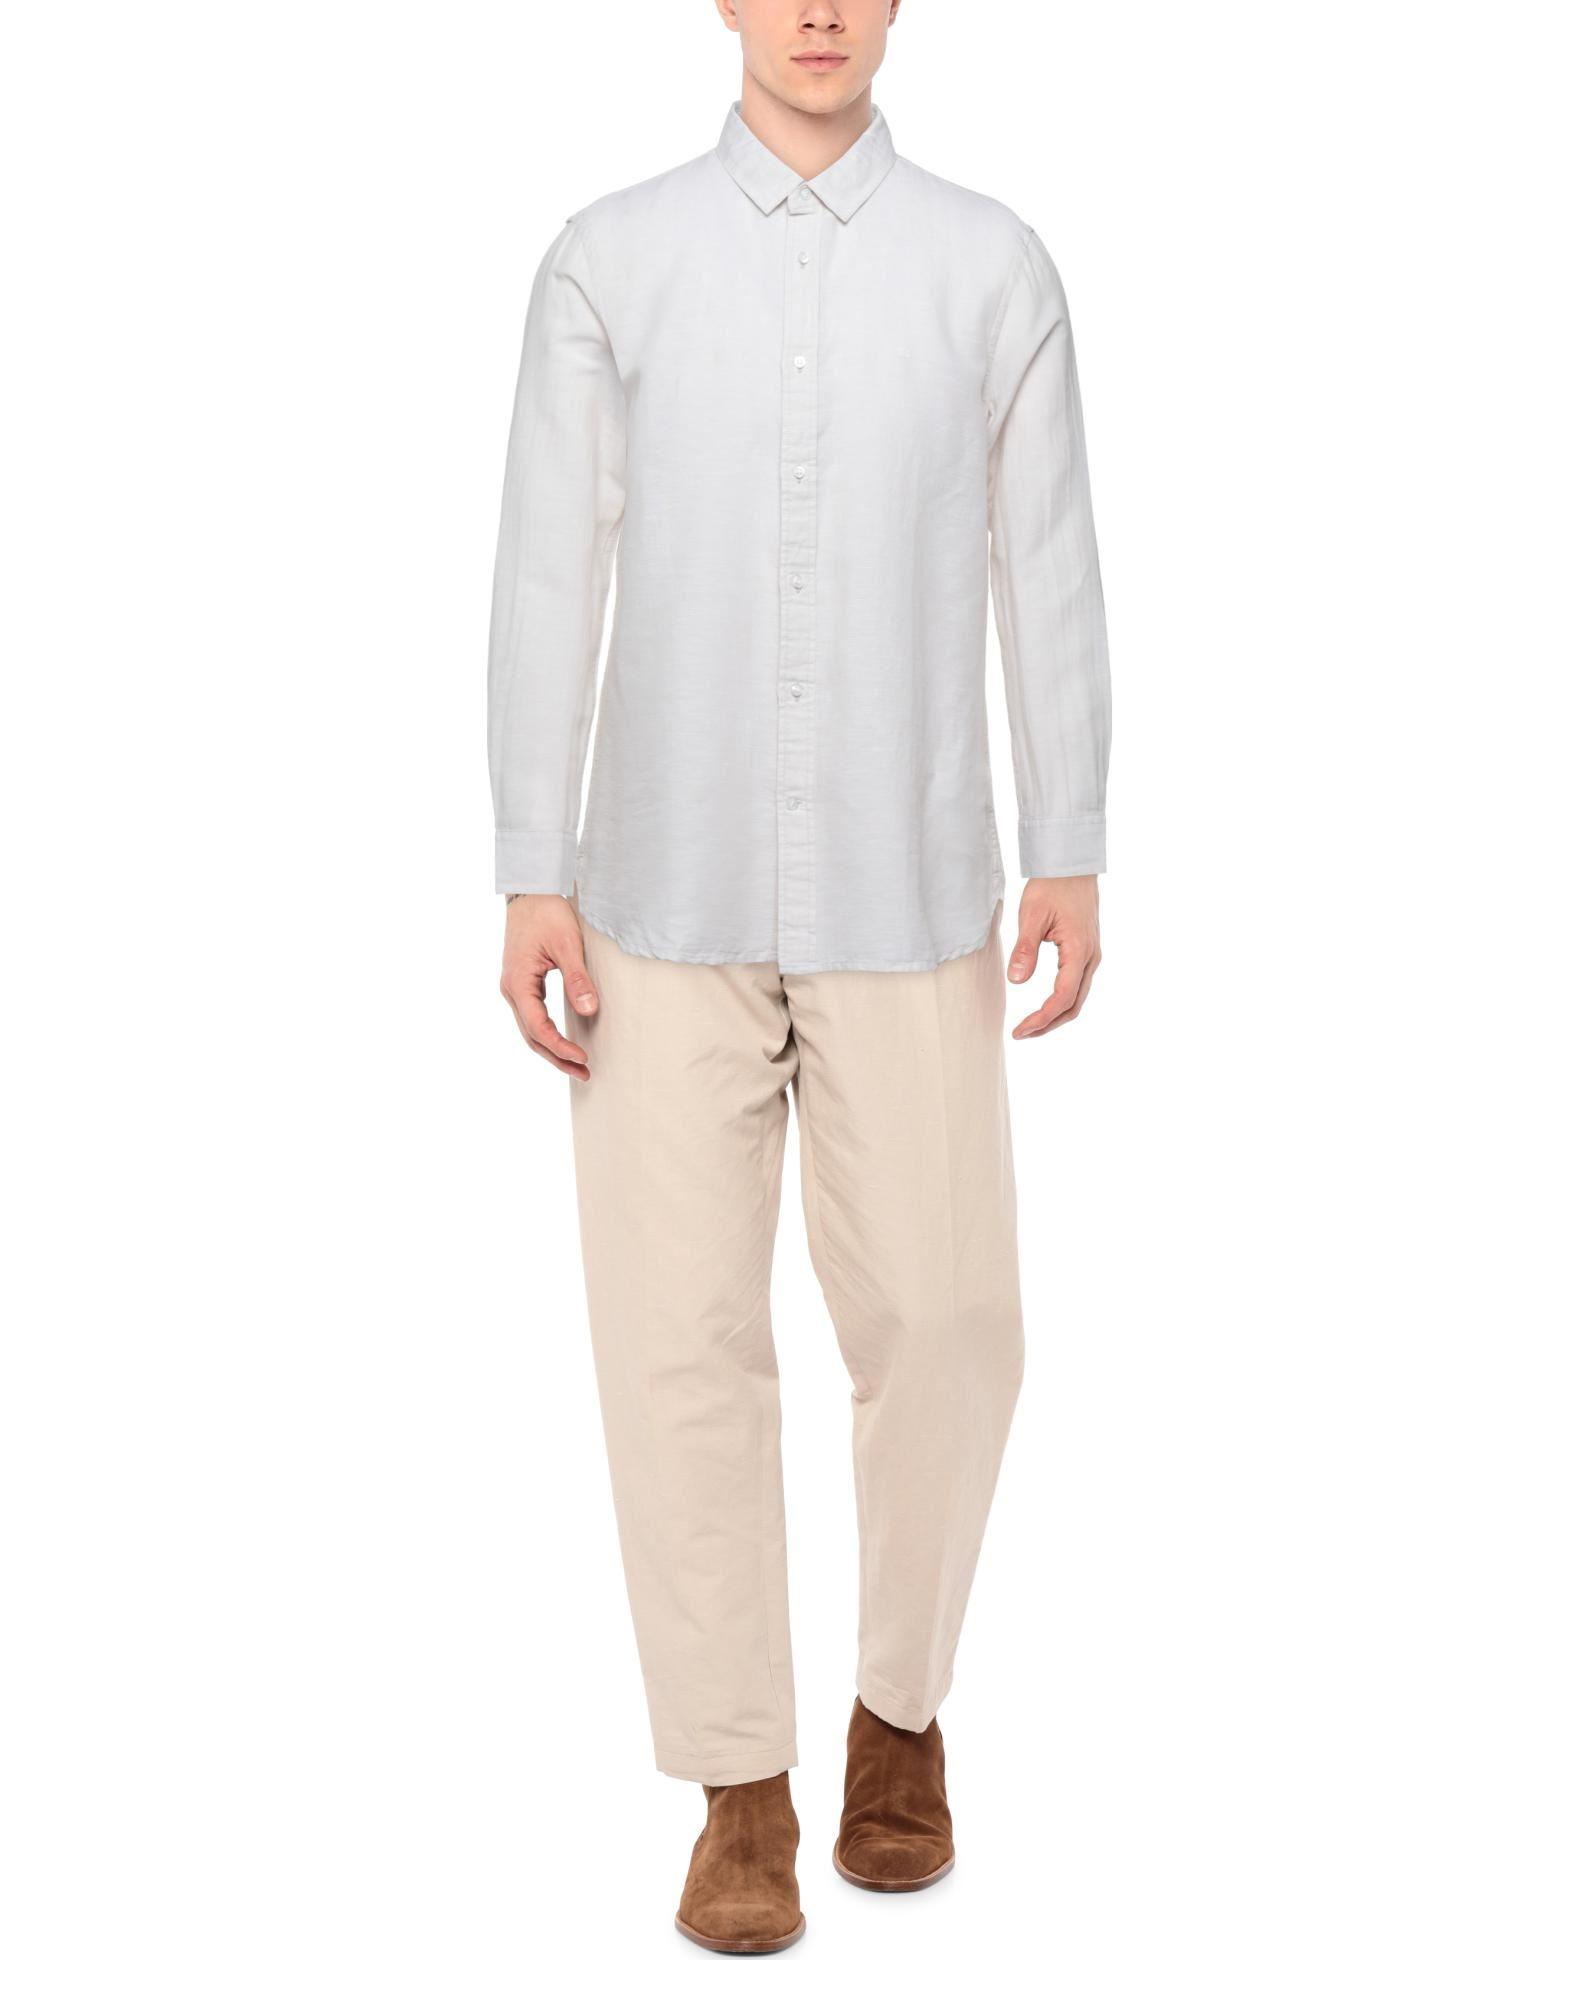 Calvin Klein Linen Shirt in Beige (Natural) for Men - Lyst